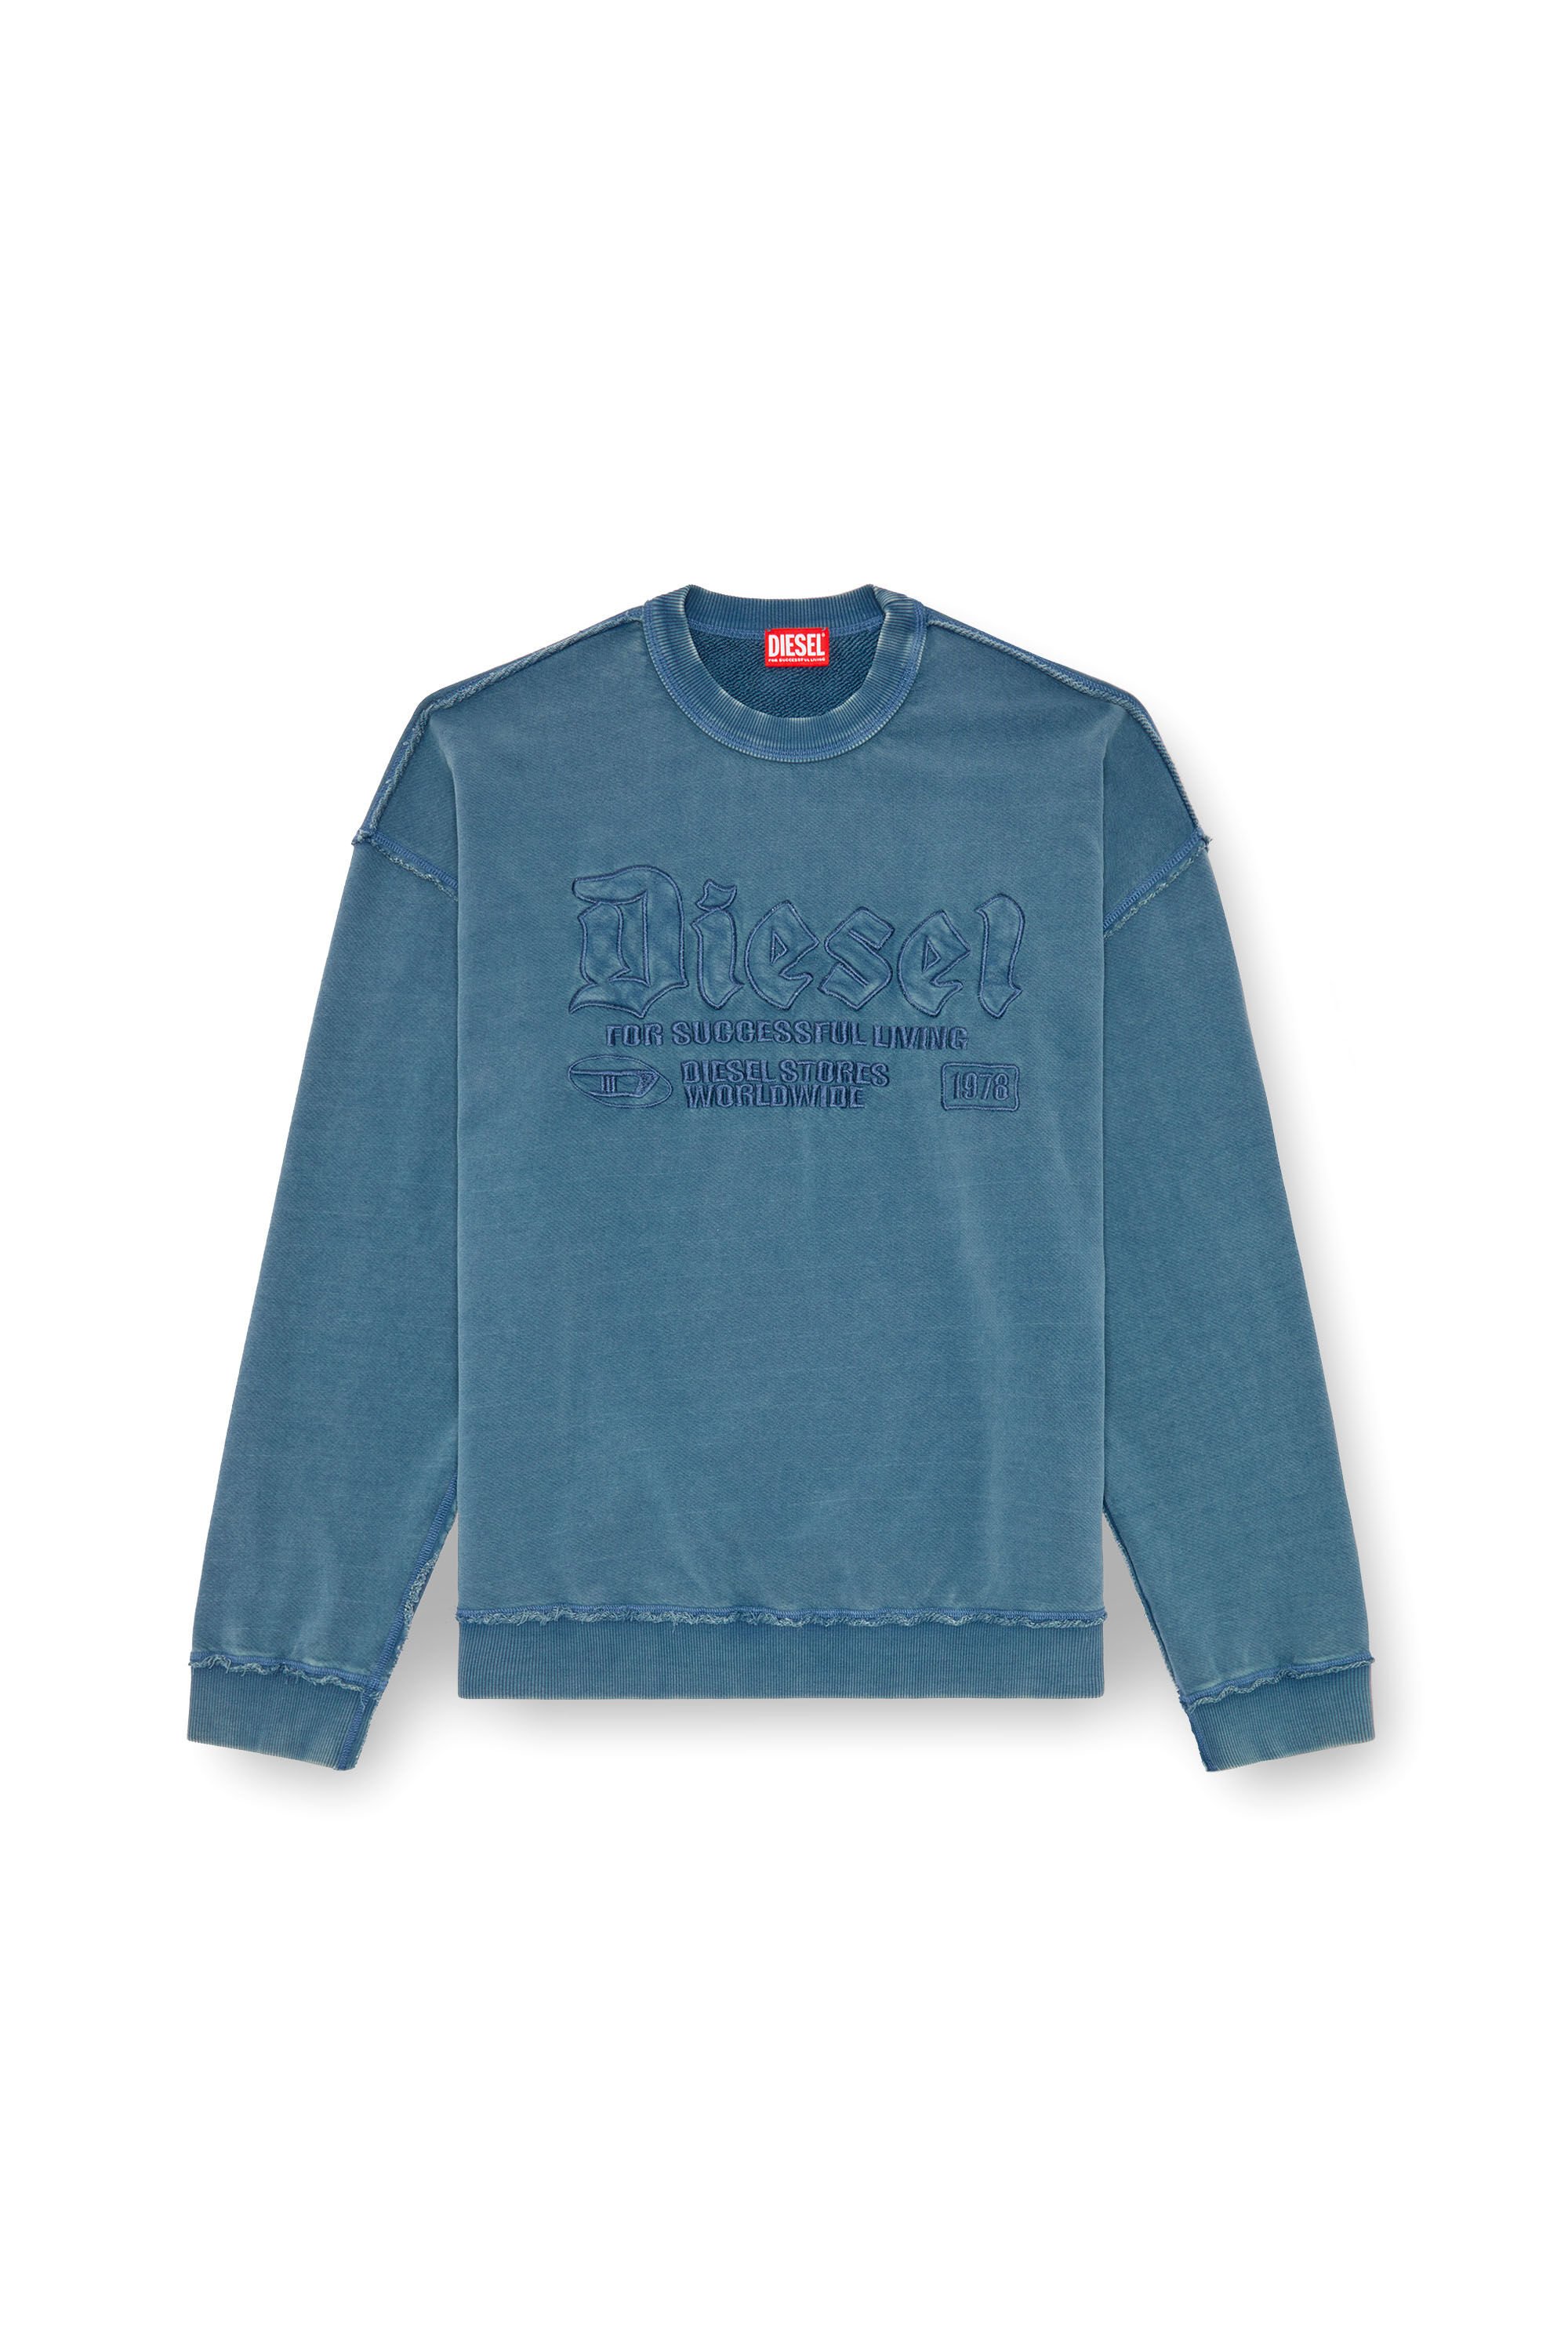 Diesel - S-BOXT-RAW, Homme Sweat-shirt avec logo brodé in Bleu - Image 2